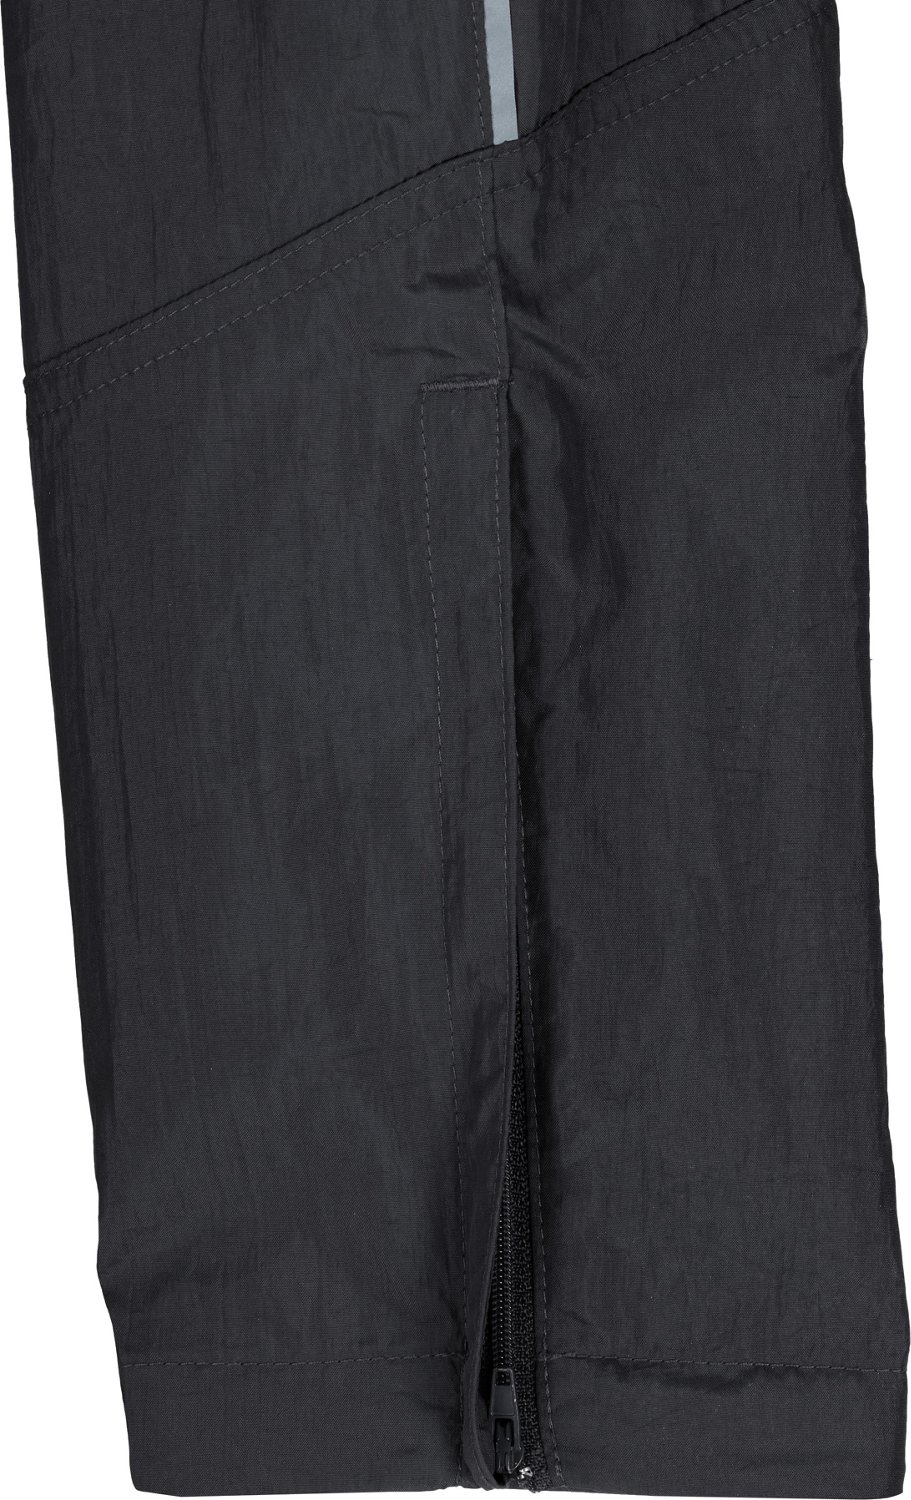 BCG ATHLETIC PANTS Gray Black Detailing Inside Pocket Sz L Waist 30 Inseam  27 £7.88 - PicClick UK